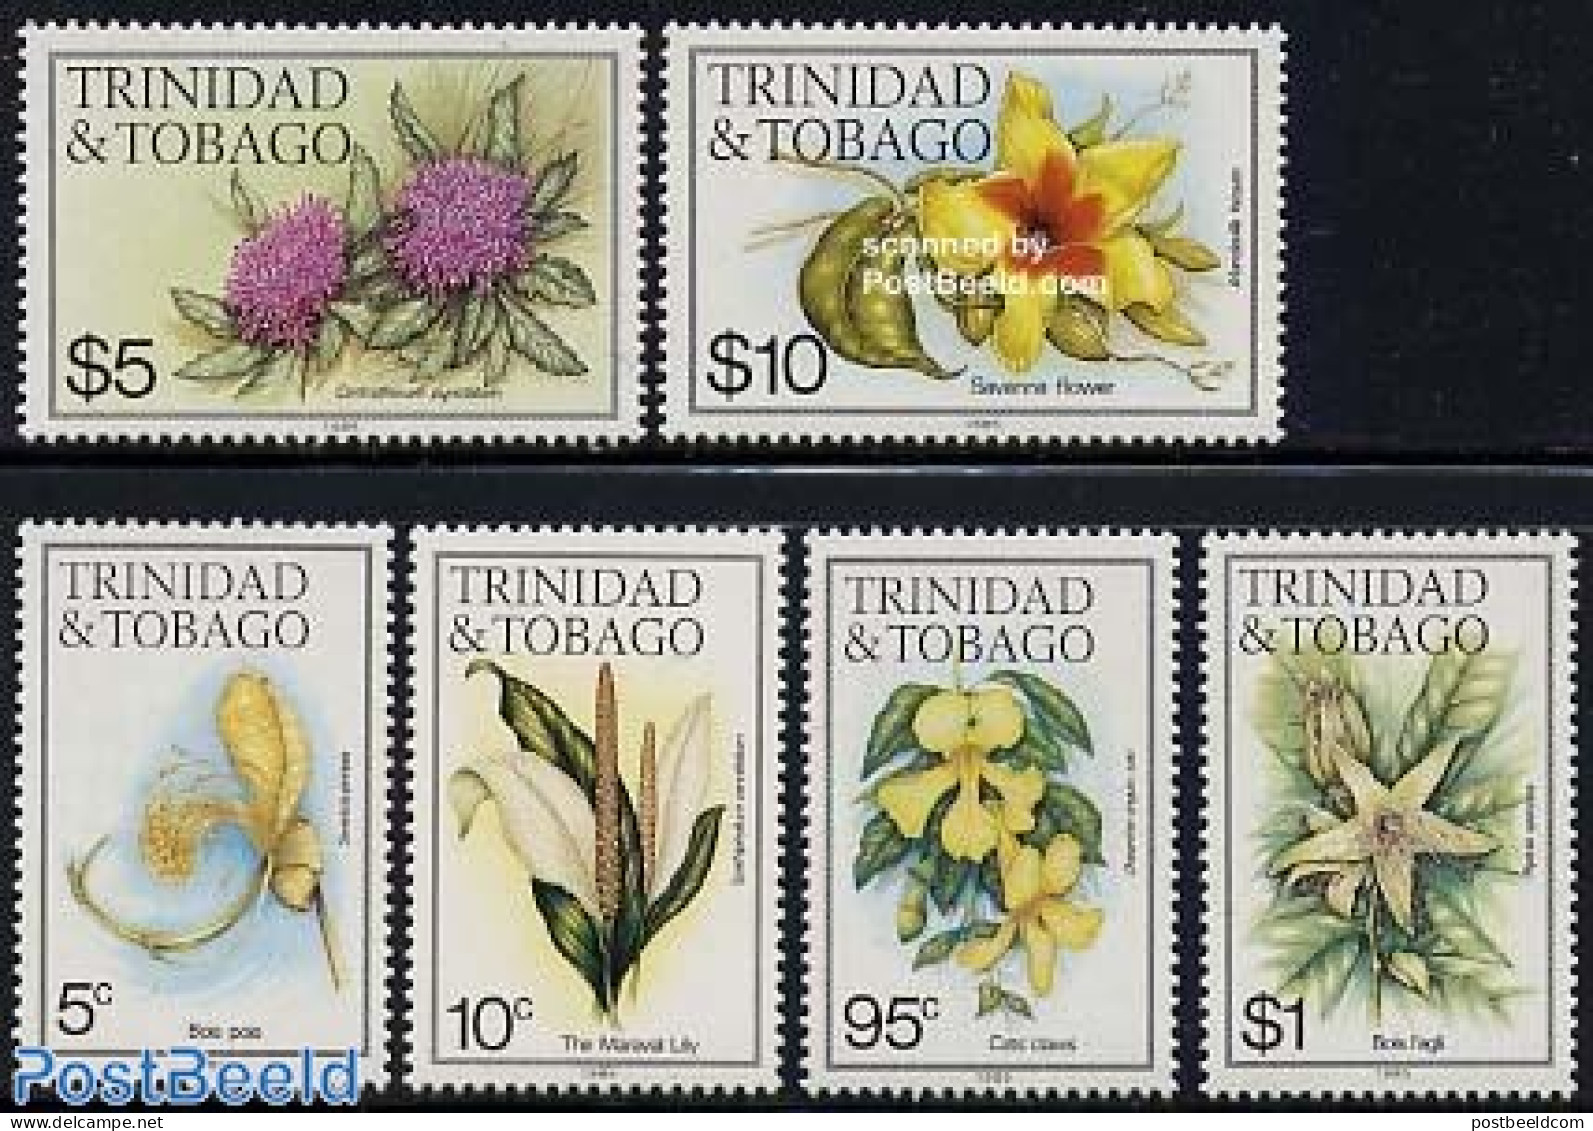 Trinidad & Tobago 1985 Flowers 6v (with Year 1985), Mint NH, Nature - Flowers & Plants - Trindad & Tobago (1962-...)